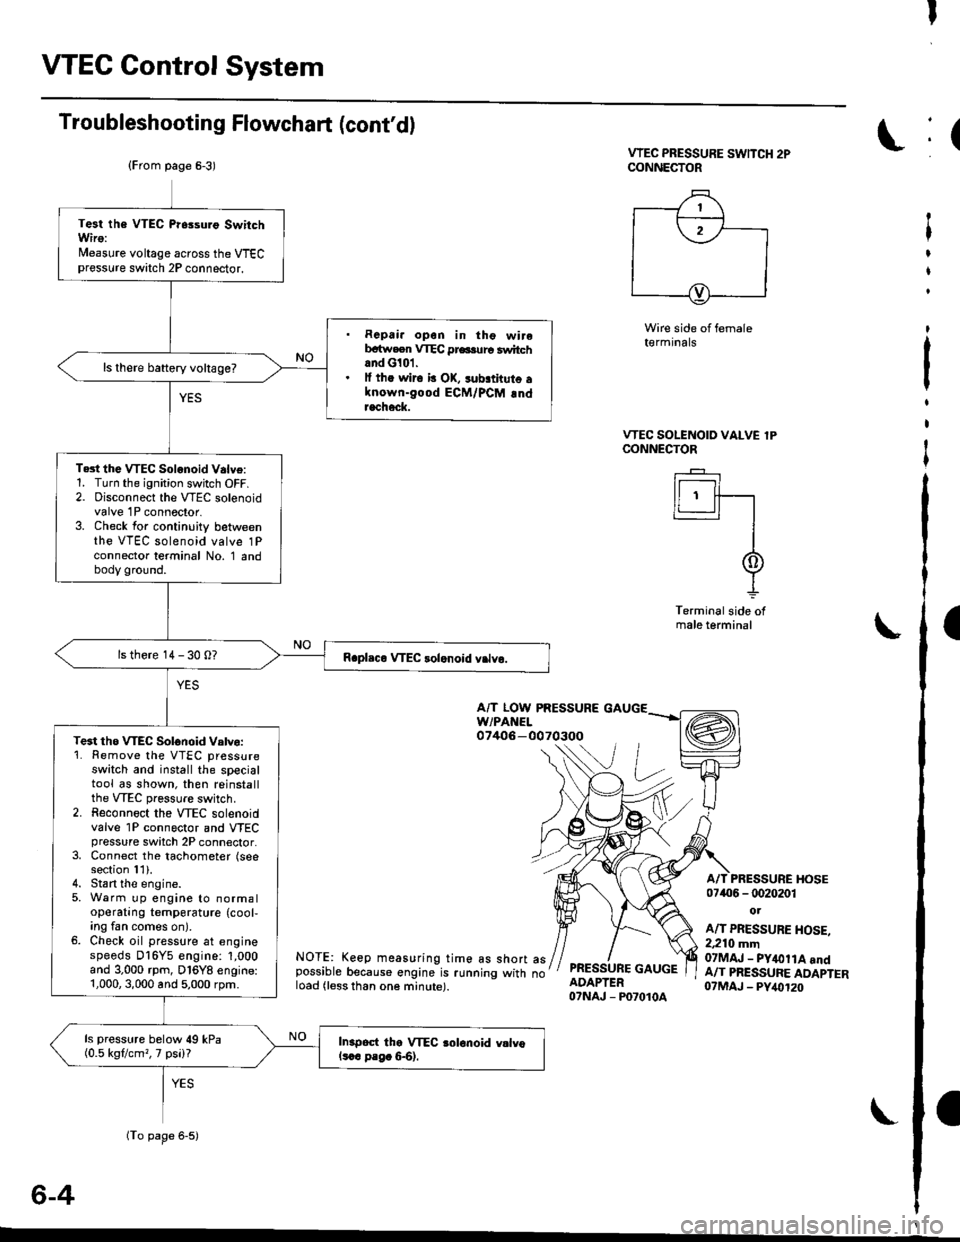 HONDA CIVIC 1999 6.G Workshop Manual I
VTEC Control System
Troubleshooting Flowchart (contd)
VTEC PRESSURE SwlTCH 2PCONNECTOR
Wire side of female(€rmrnats
VTEC SOLENOID VALVE lPCONNECTOR
I r----t I
ll  ff---r�-�1
I
I
-L
Terminal s